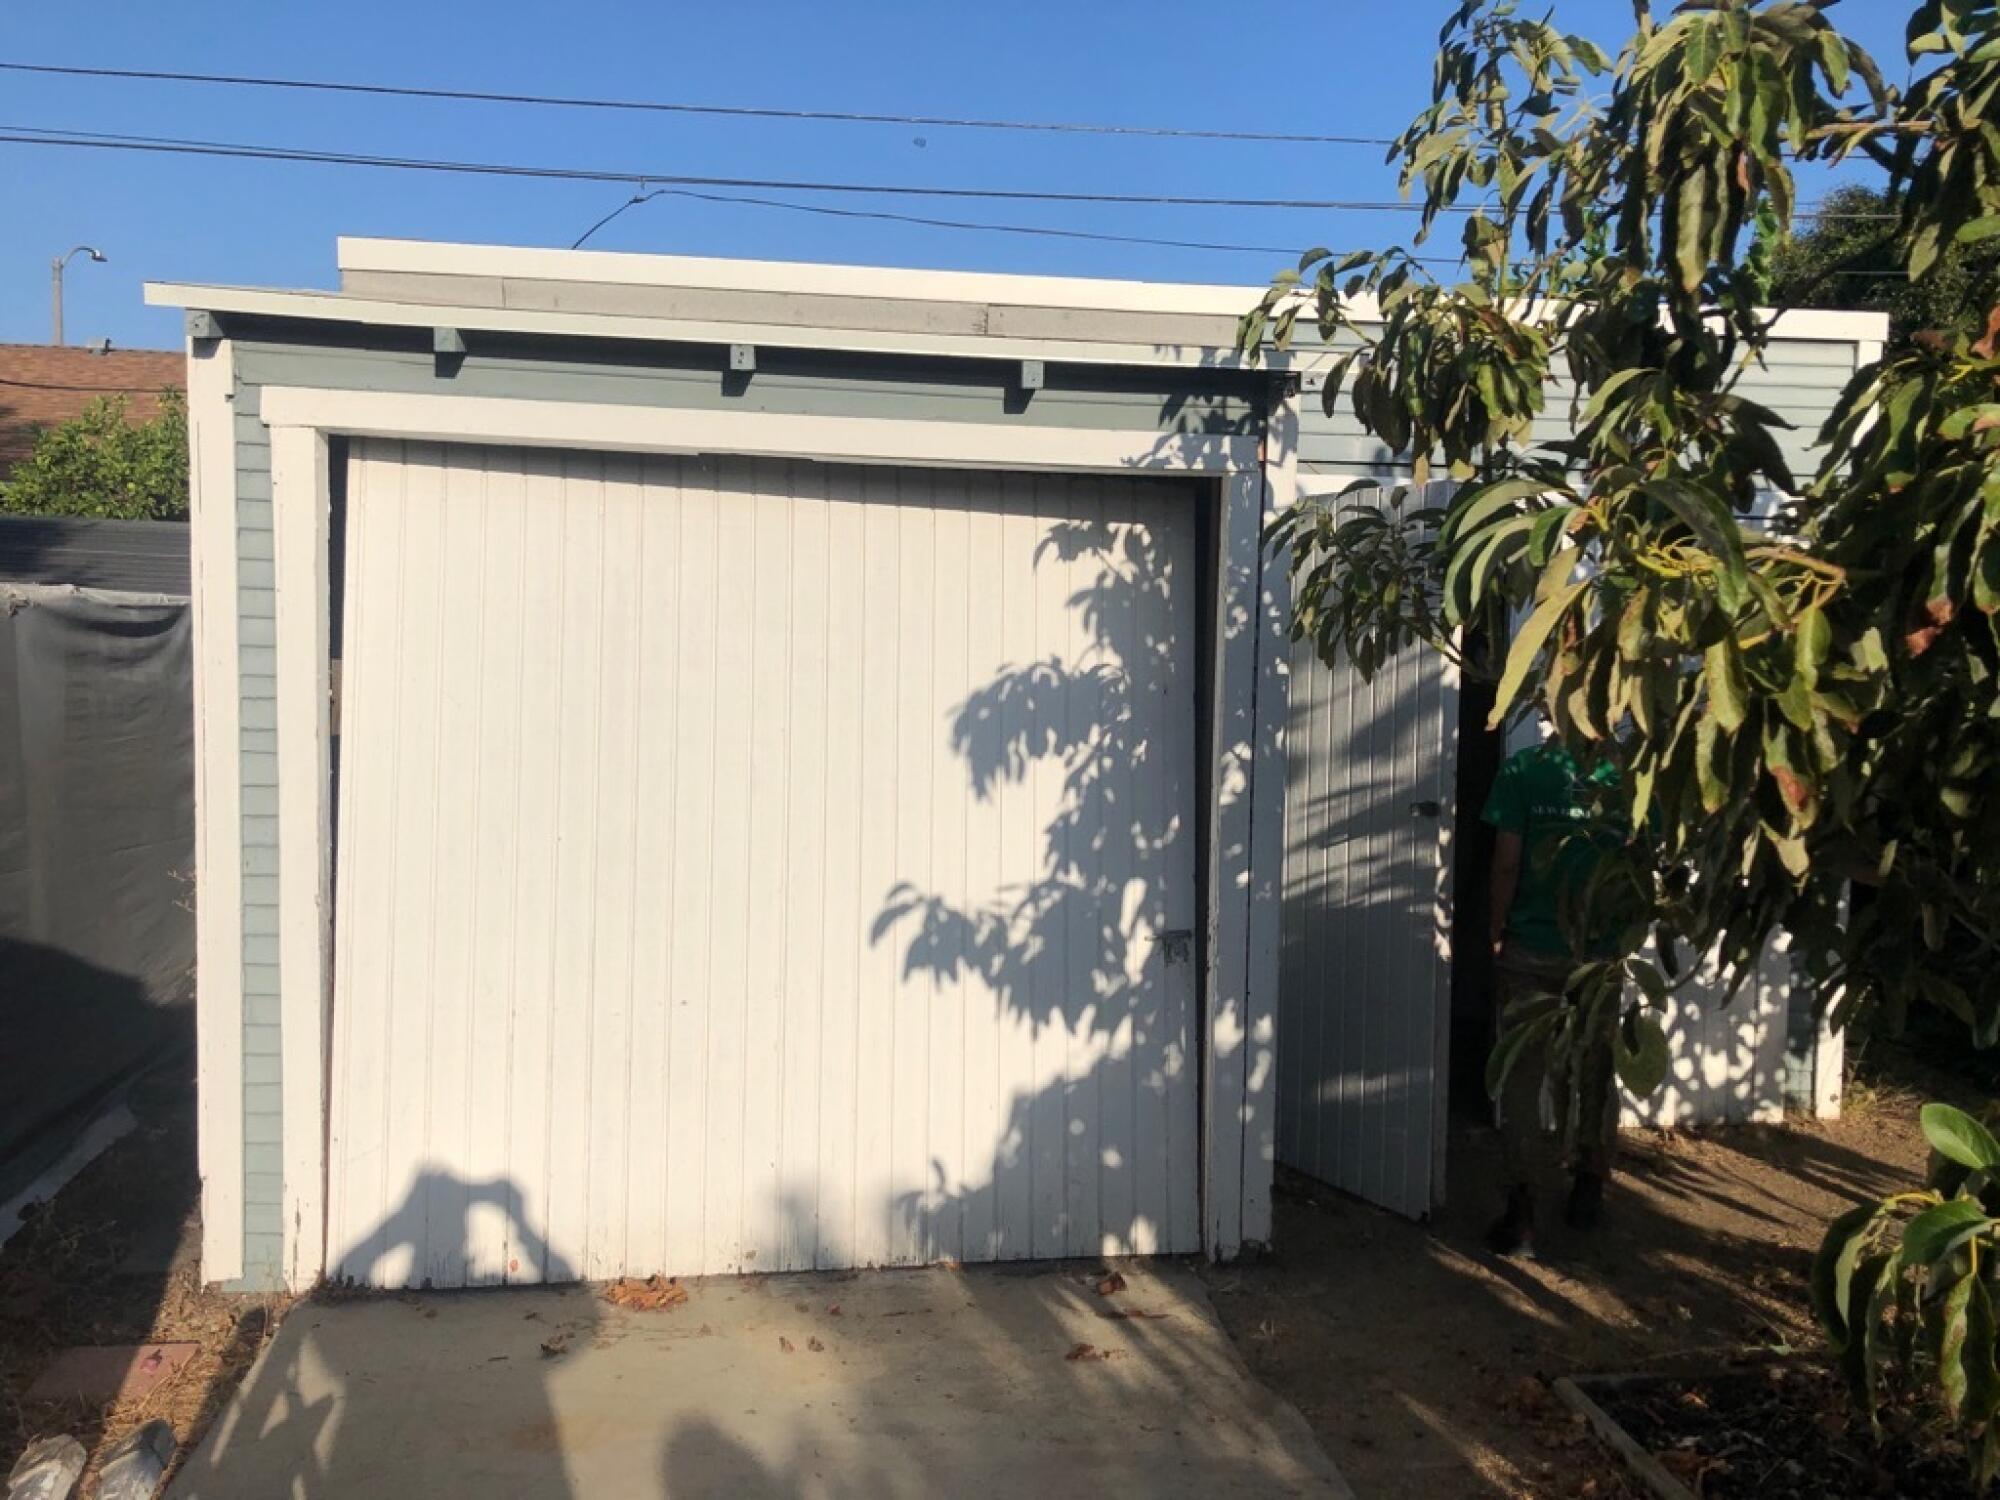 A single-car garage with a white garage door.